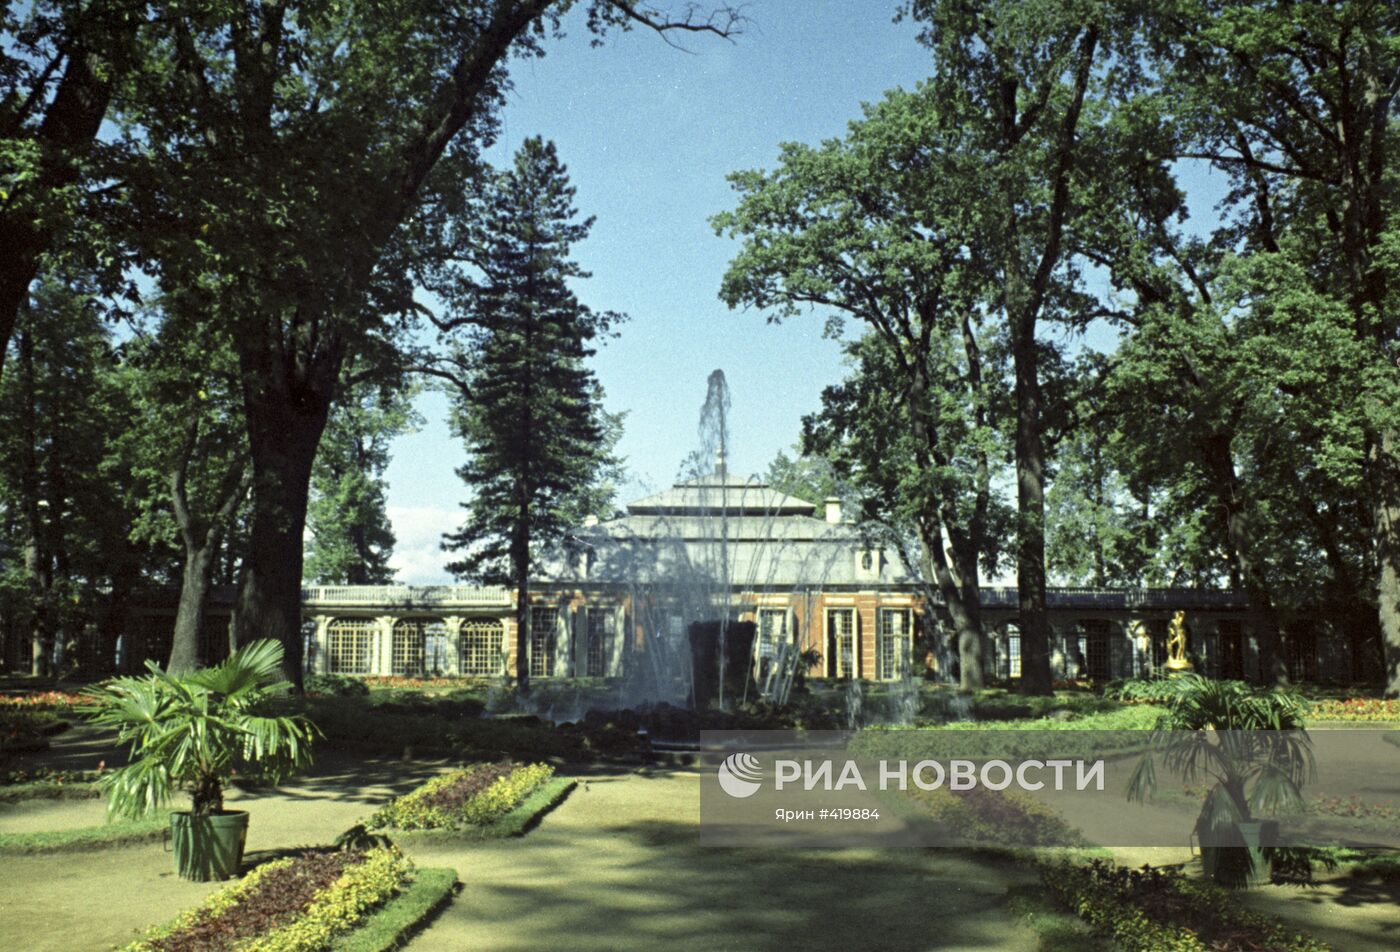 Сад Монплезир в Петродворце